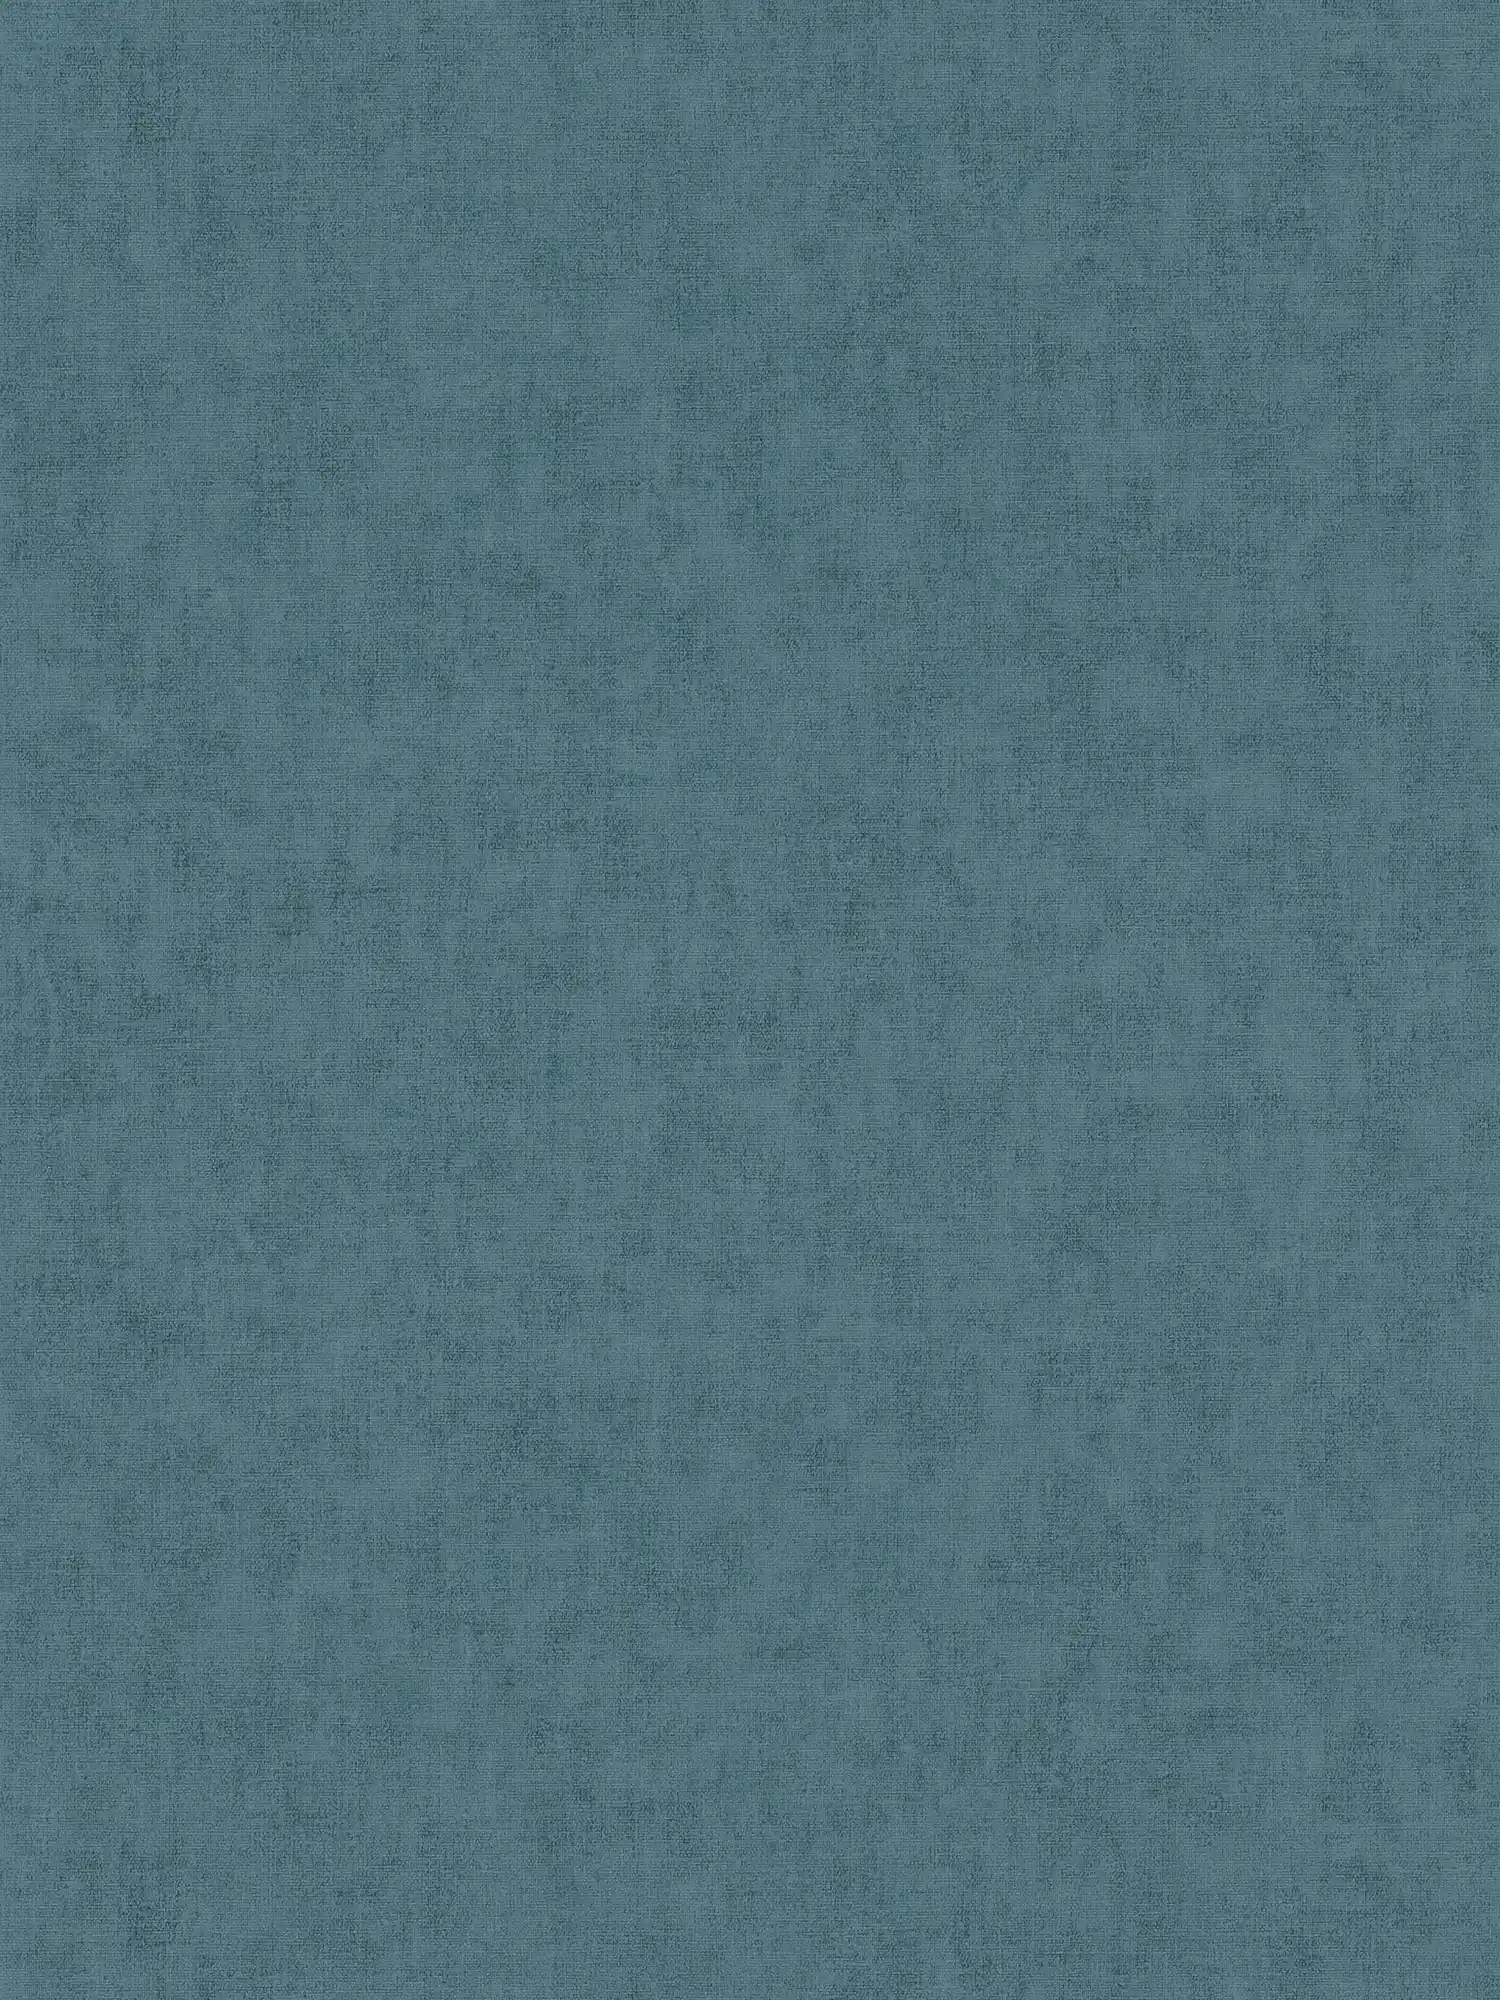 Vliestapete Textil-Optik im Scandinavian Stil - Blau, Grau
